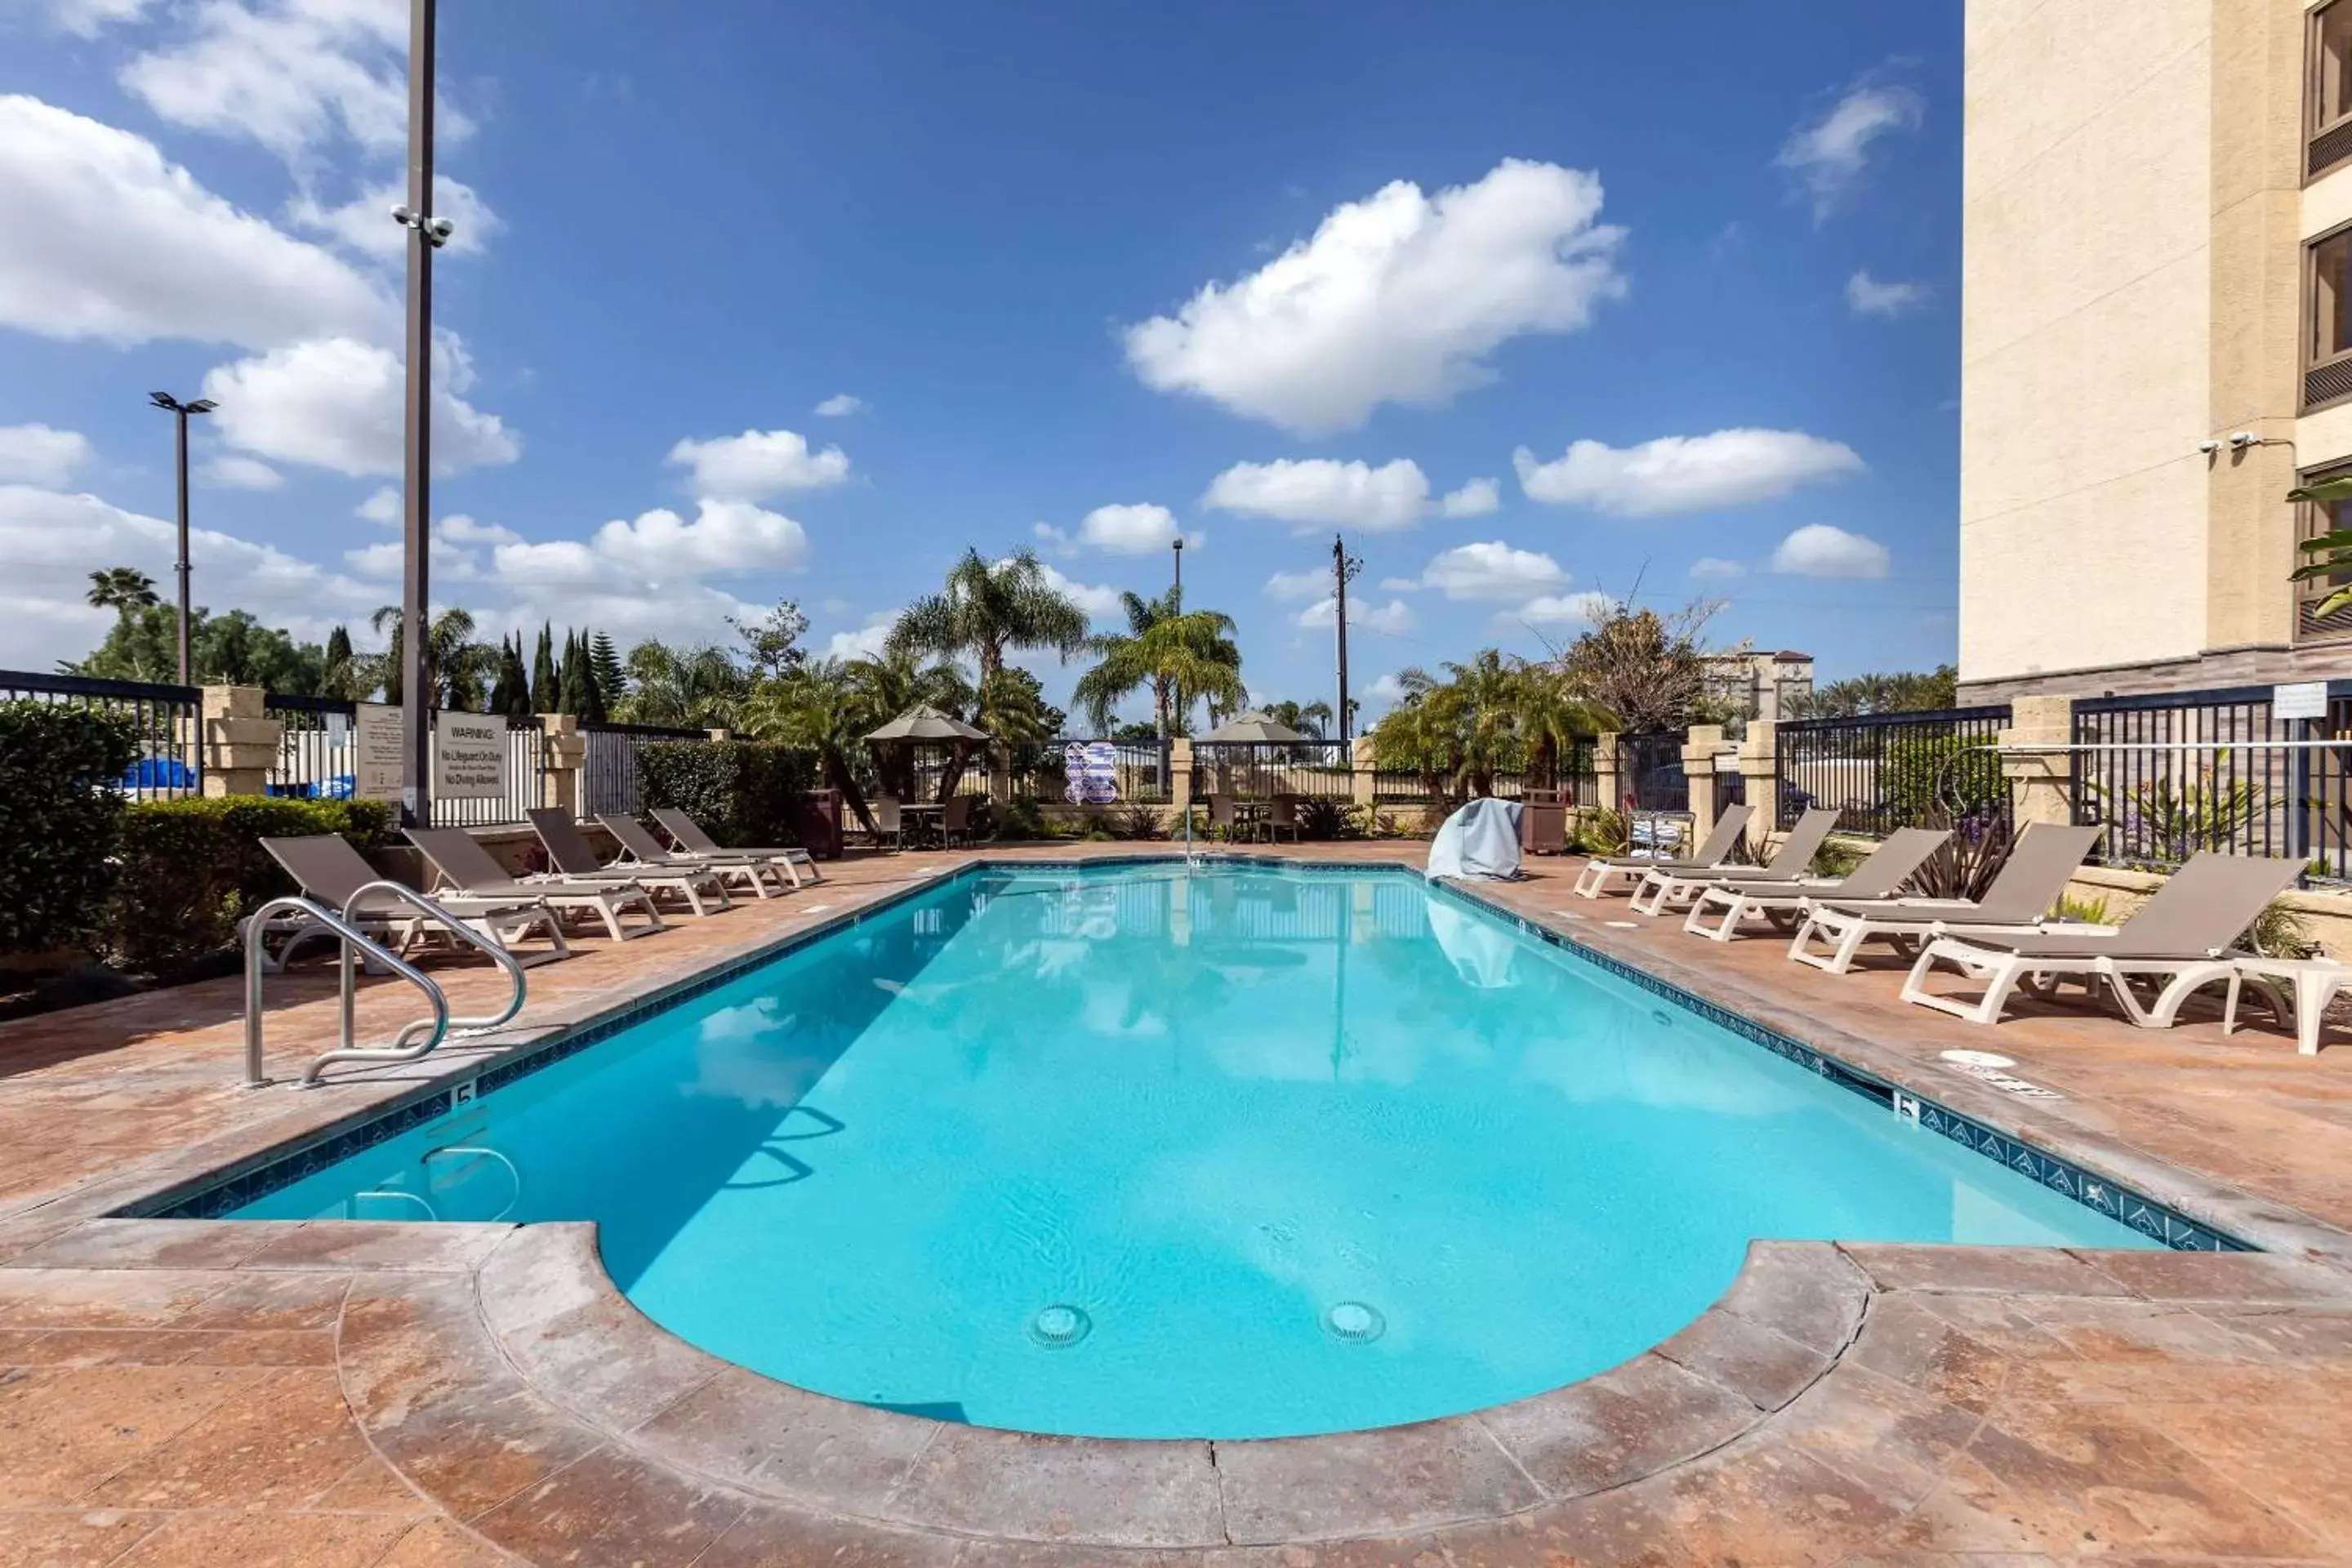 On site, Swimming Pool in Comfort Inn Anaheim Resort